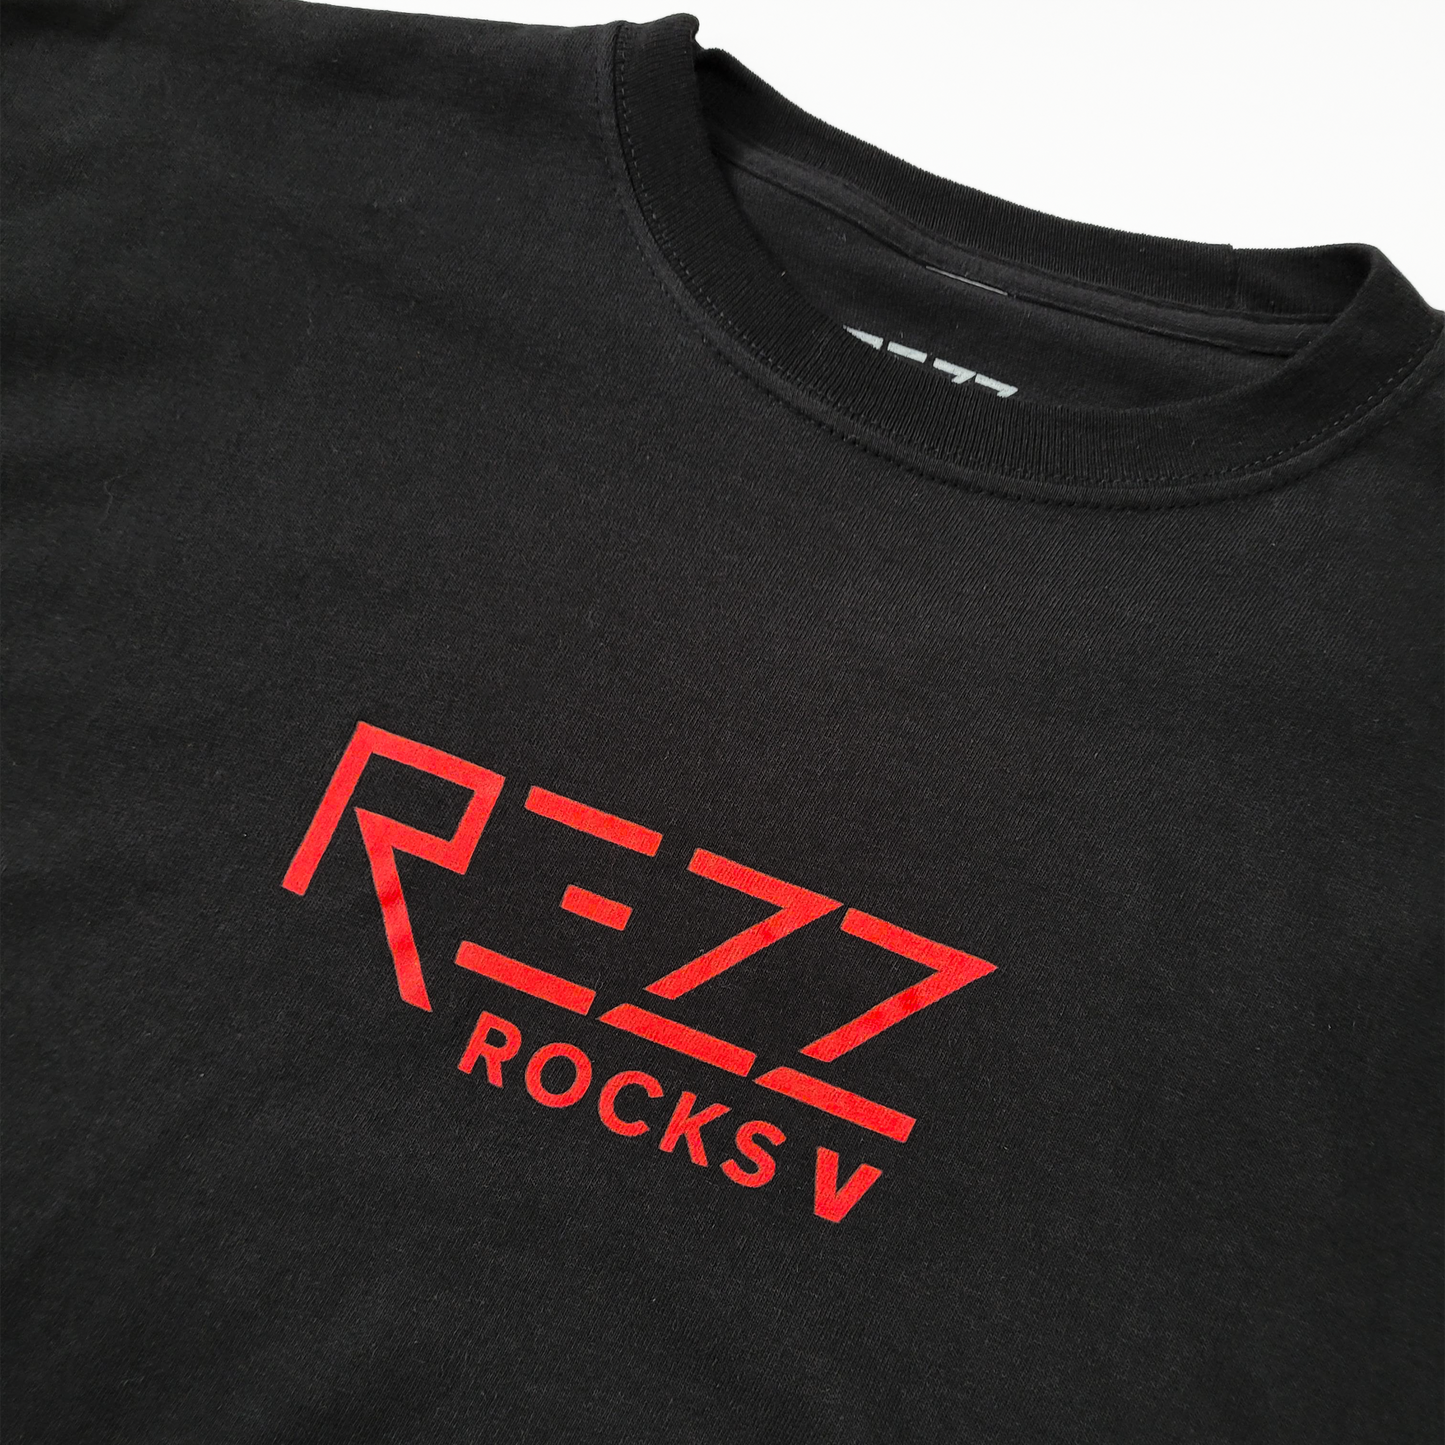 REZZ - Rezz Rocks V - Longsleeve